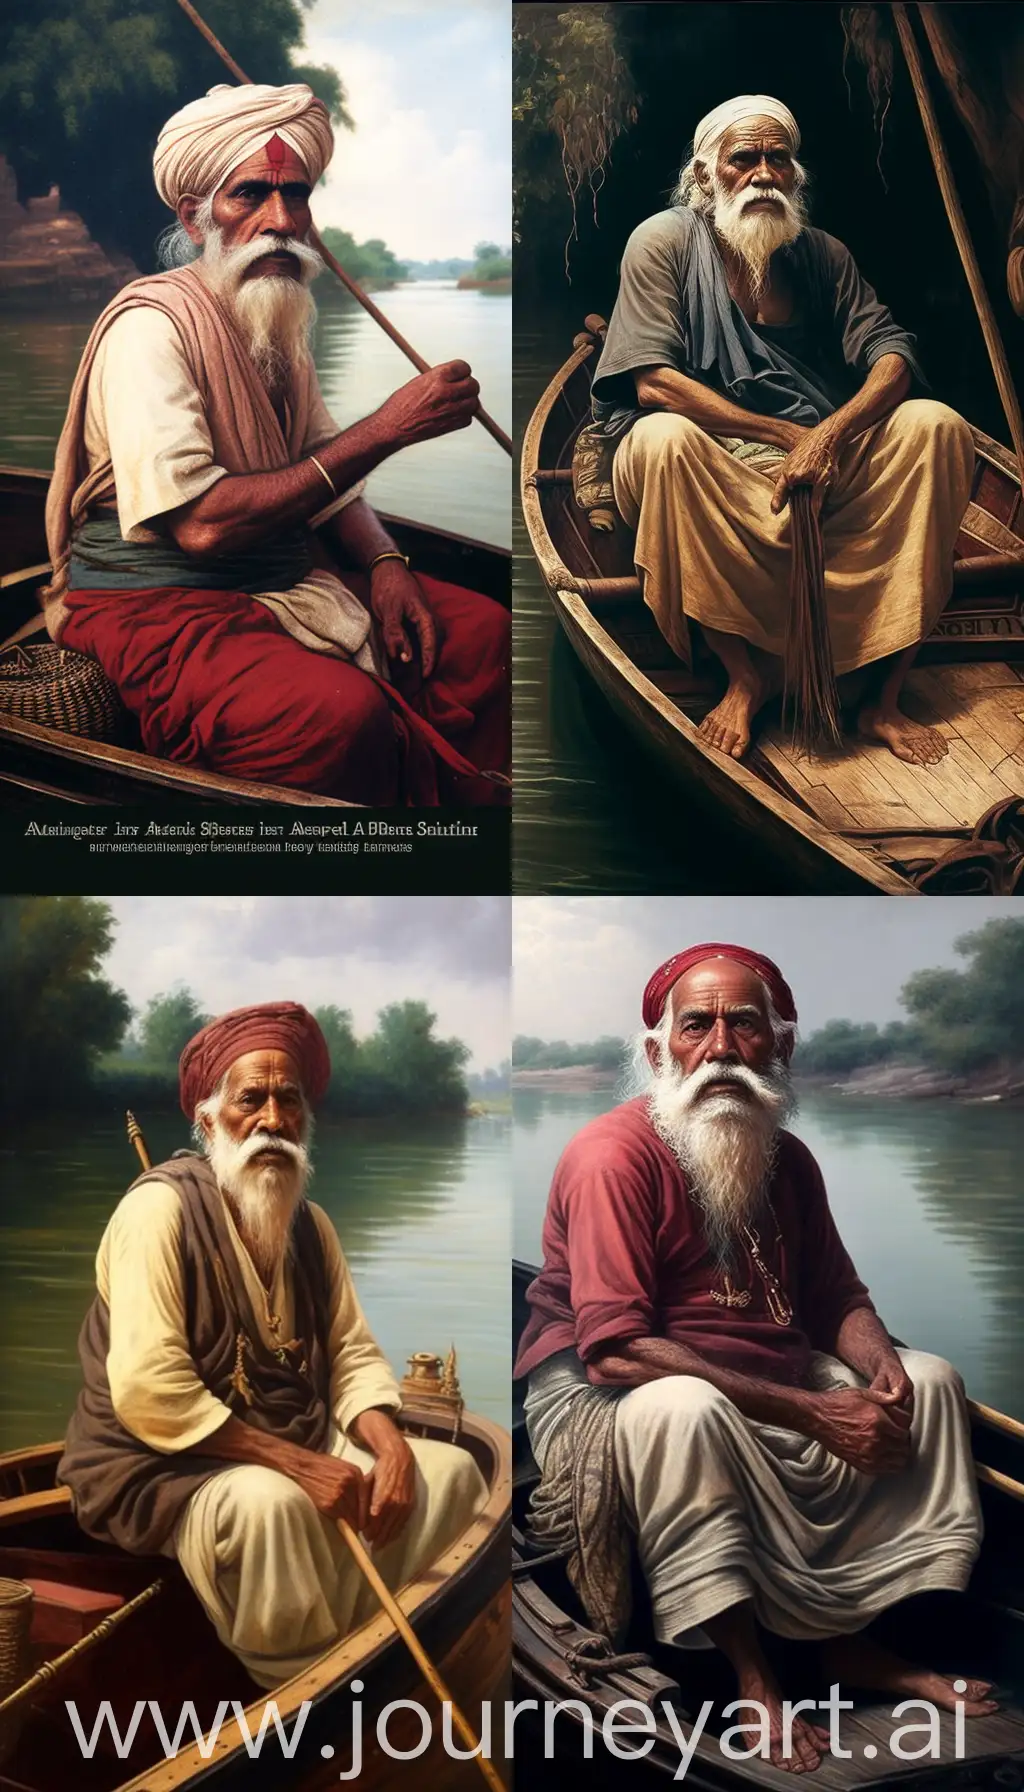 Ancient-Indian-Fisherman-on-River-Boat-Catching-Fish-in-Raj-Ravi-Varma-Art-Style